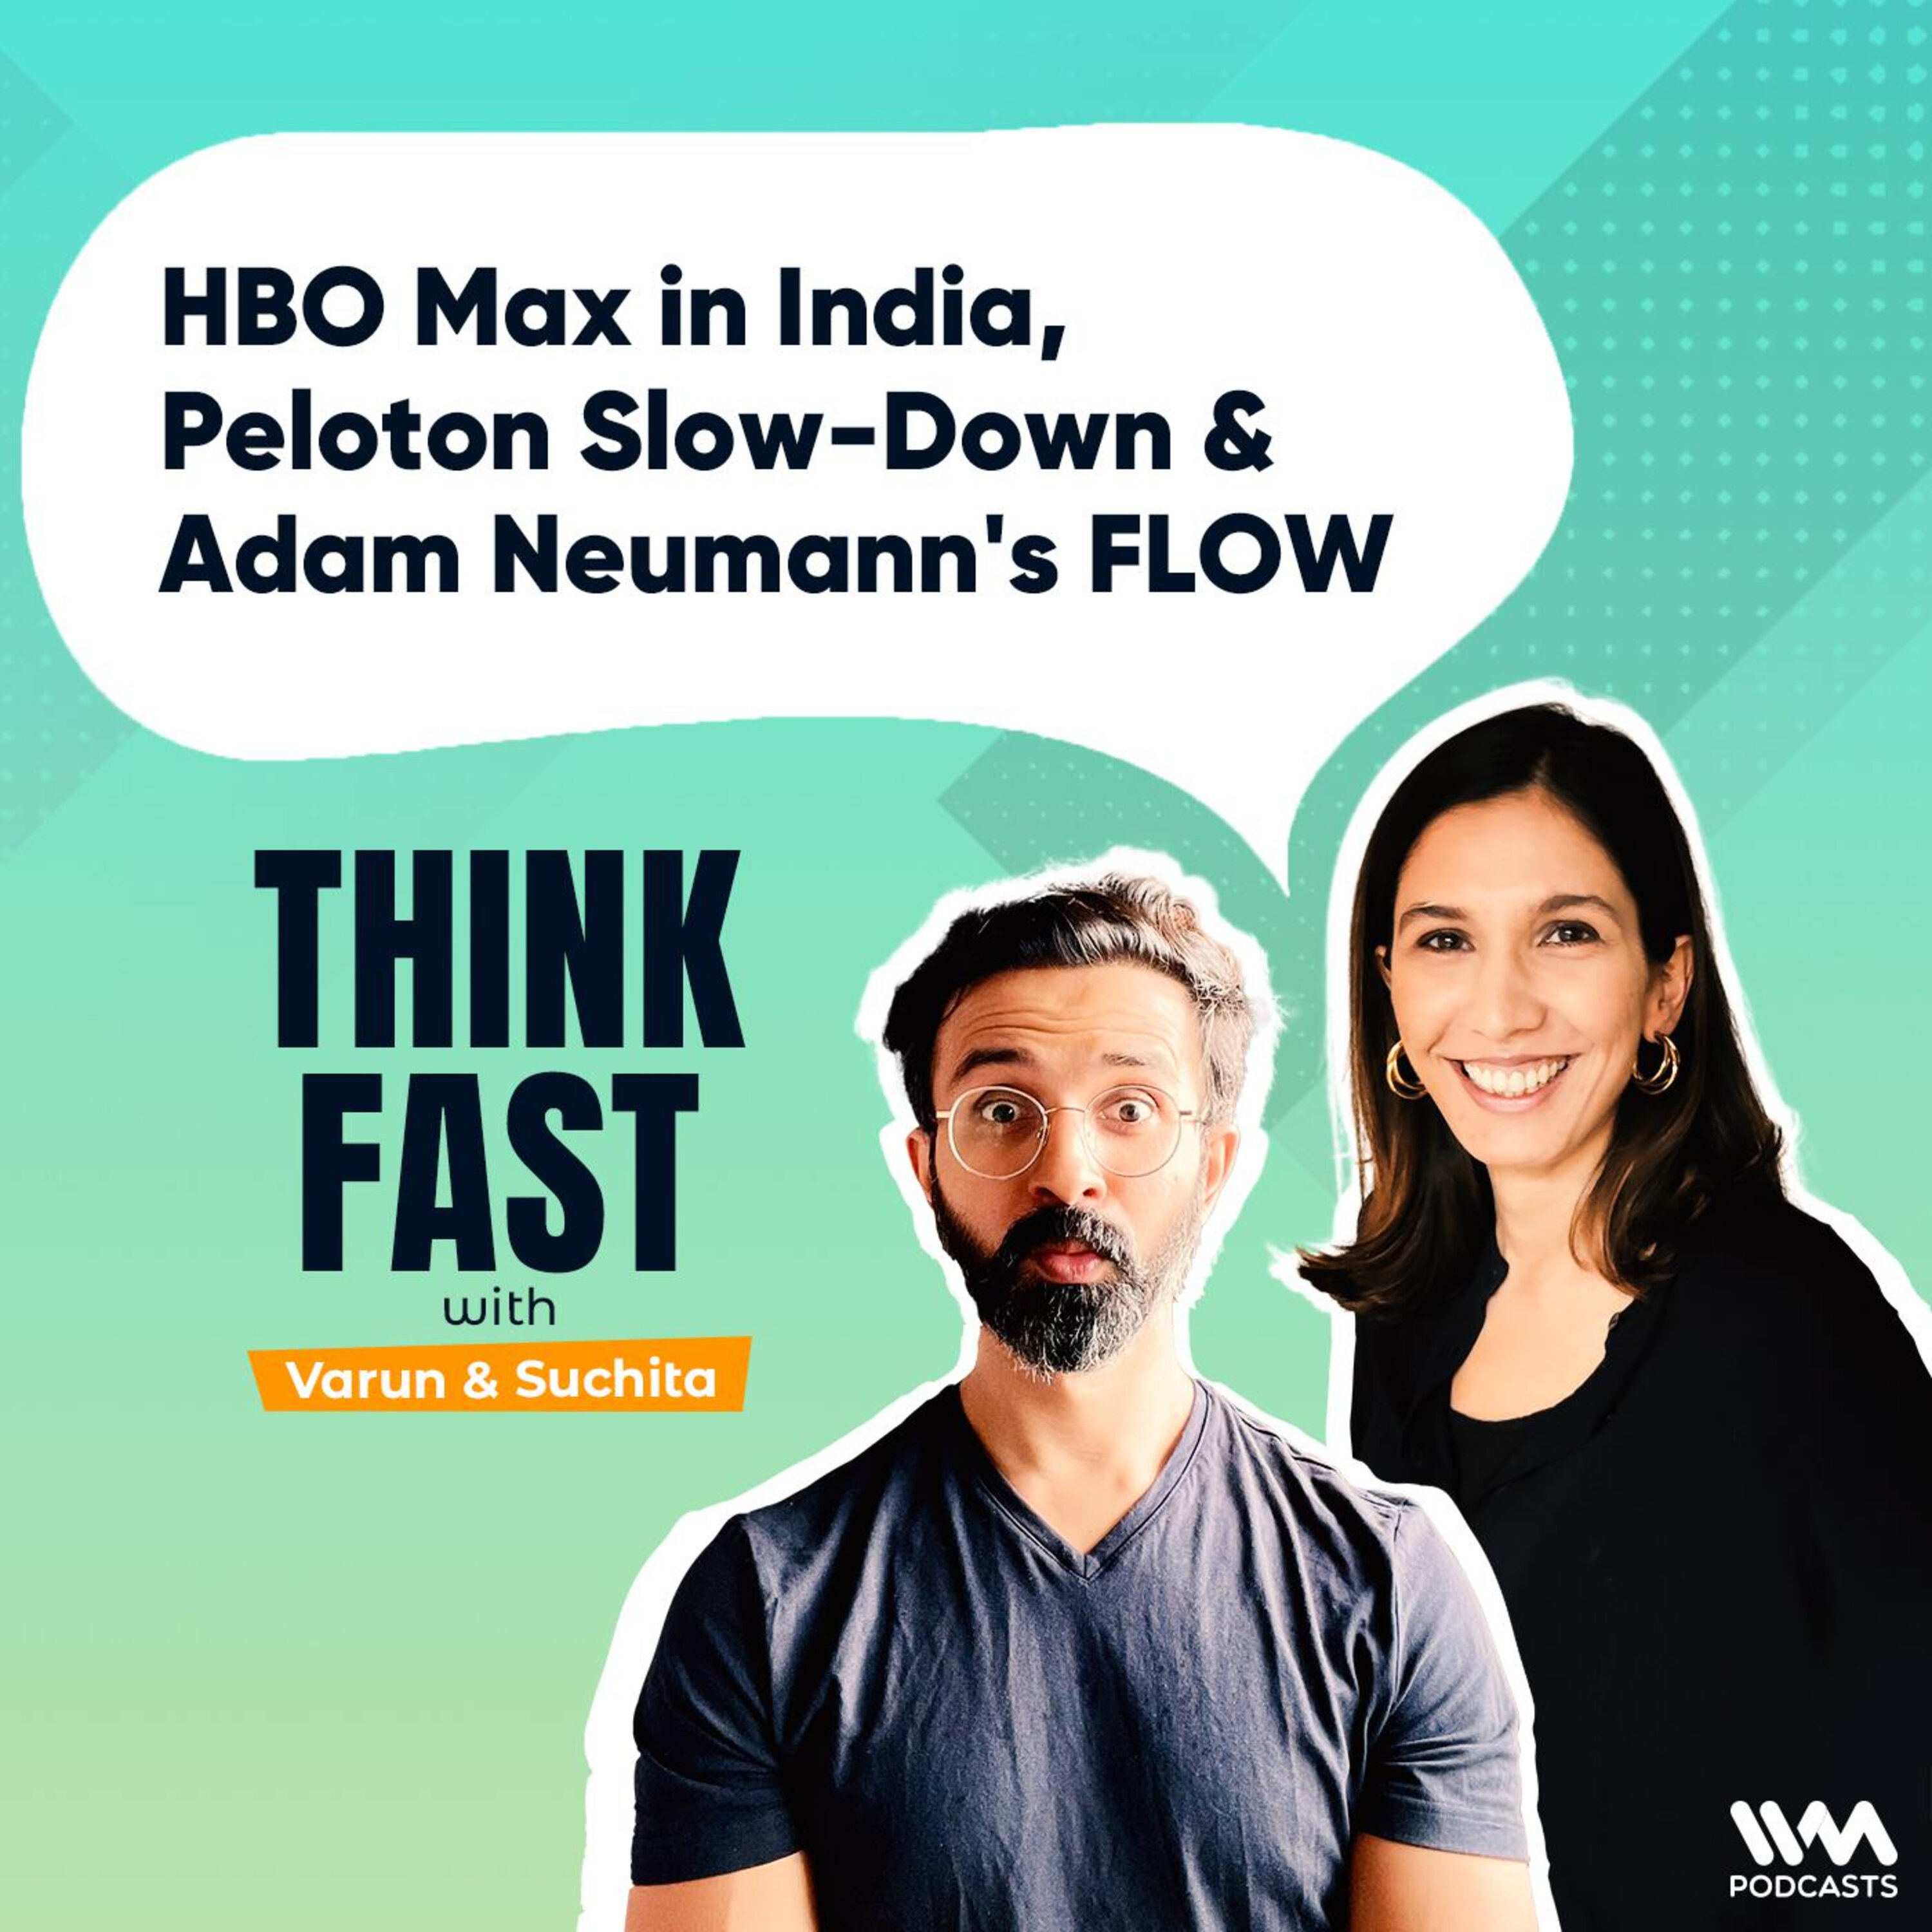 HBO Max in India, Peloton Slow-Down & Adam Neumann’s FLOW